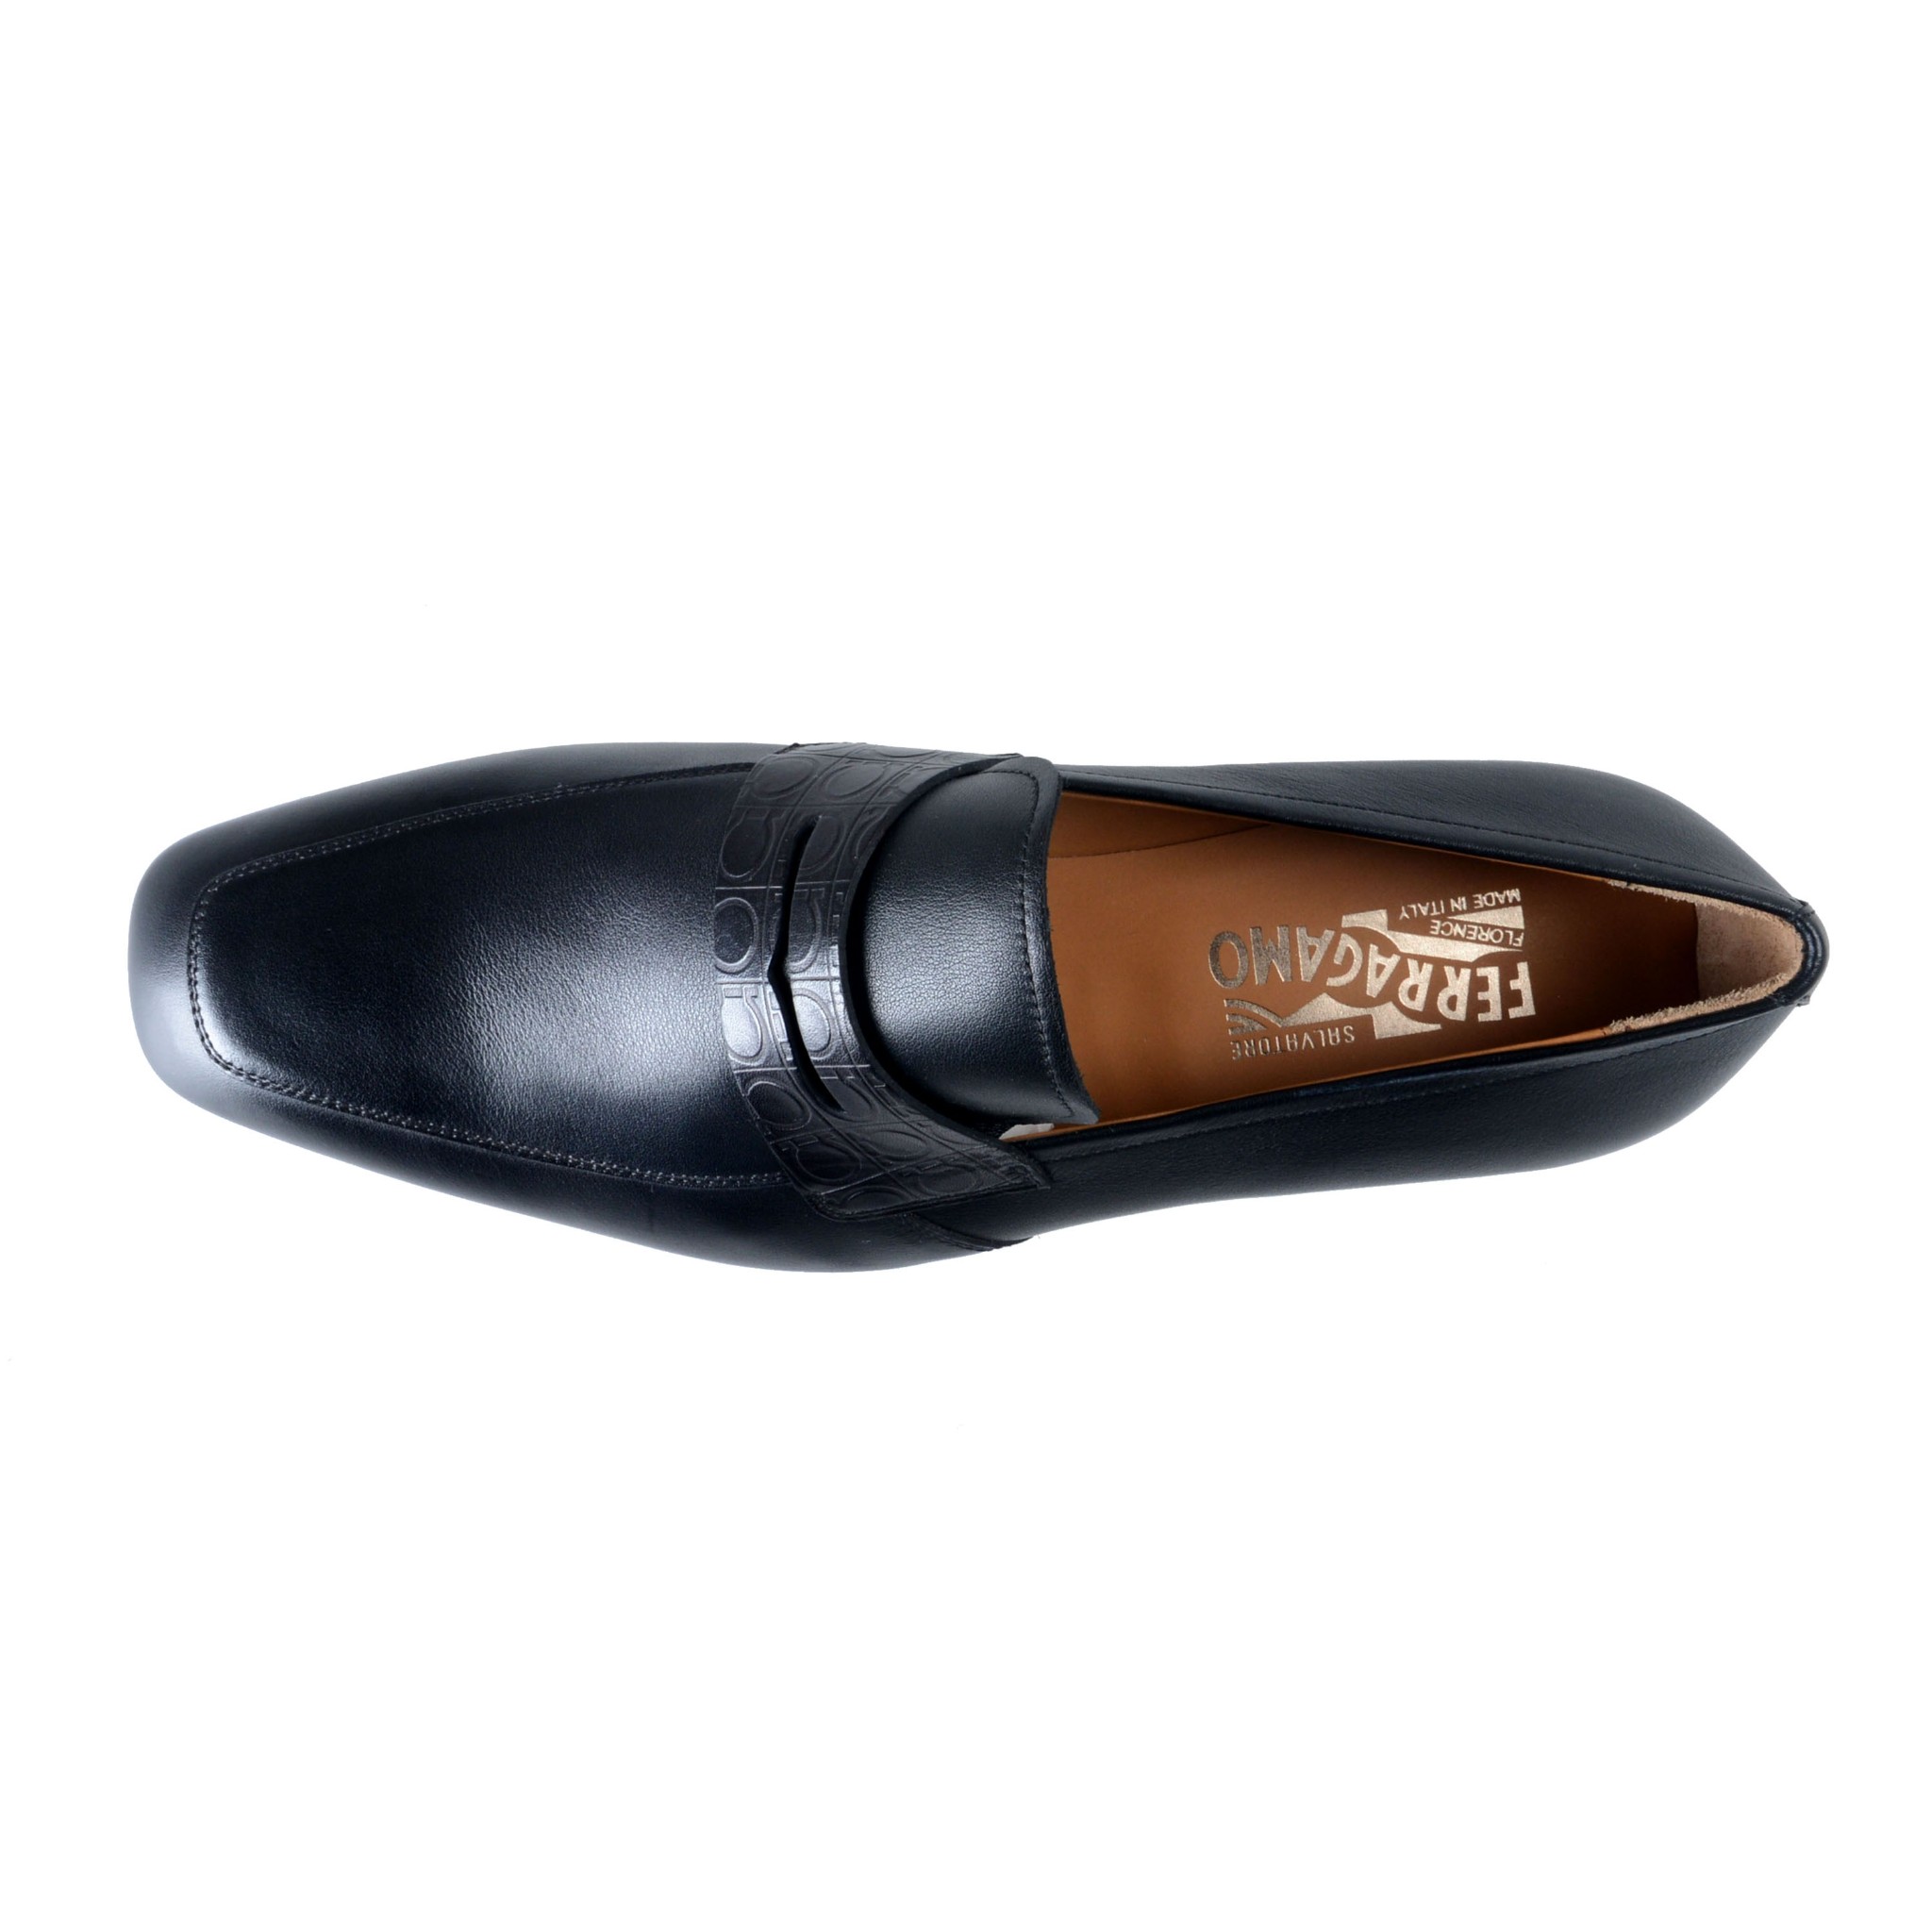 Salvatore Ferragamo "Laramie" Men's Leather Black Loafers Slip On Shoes